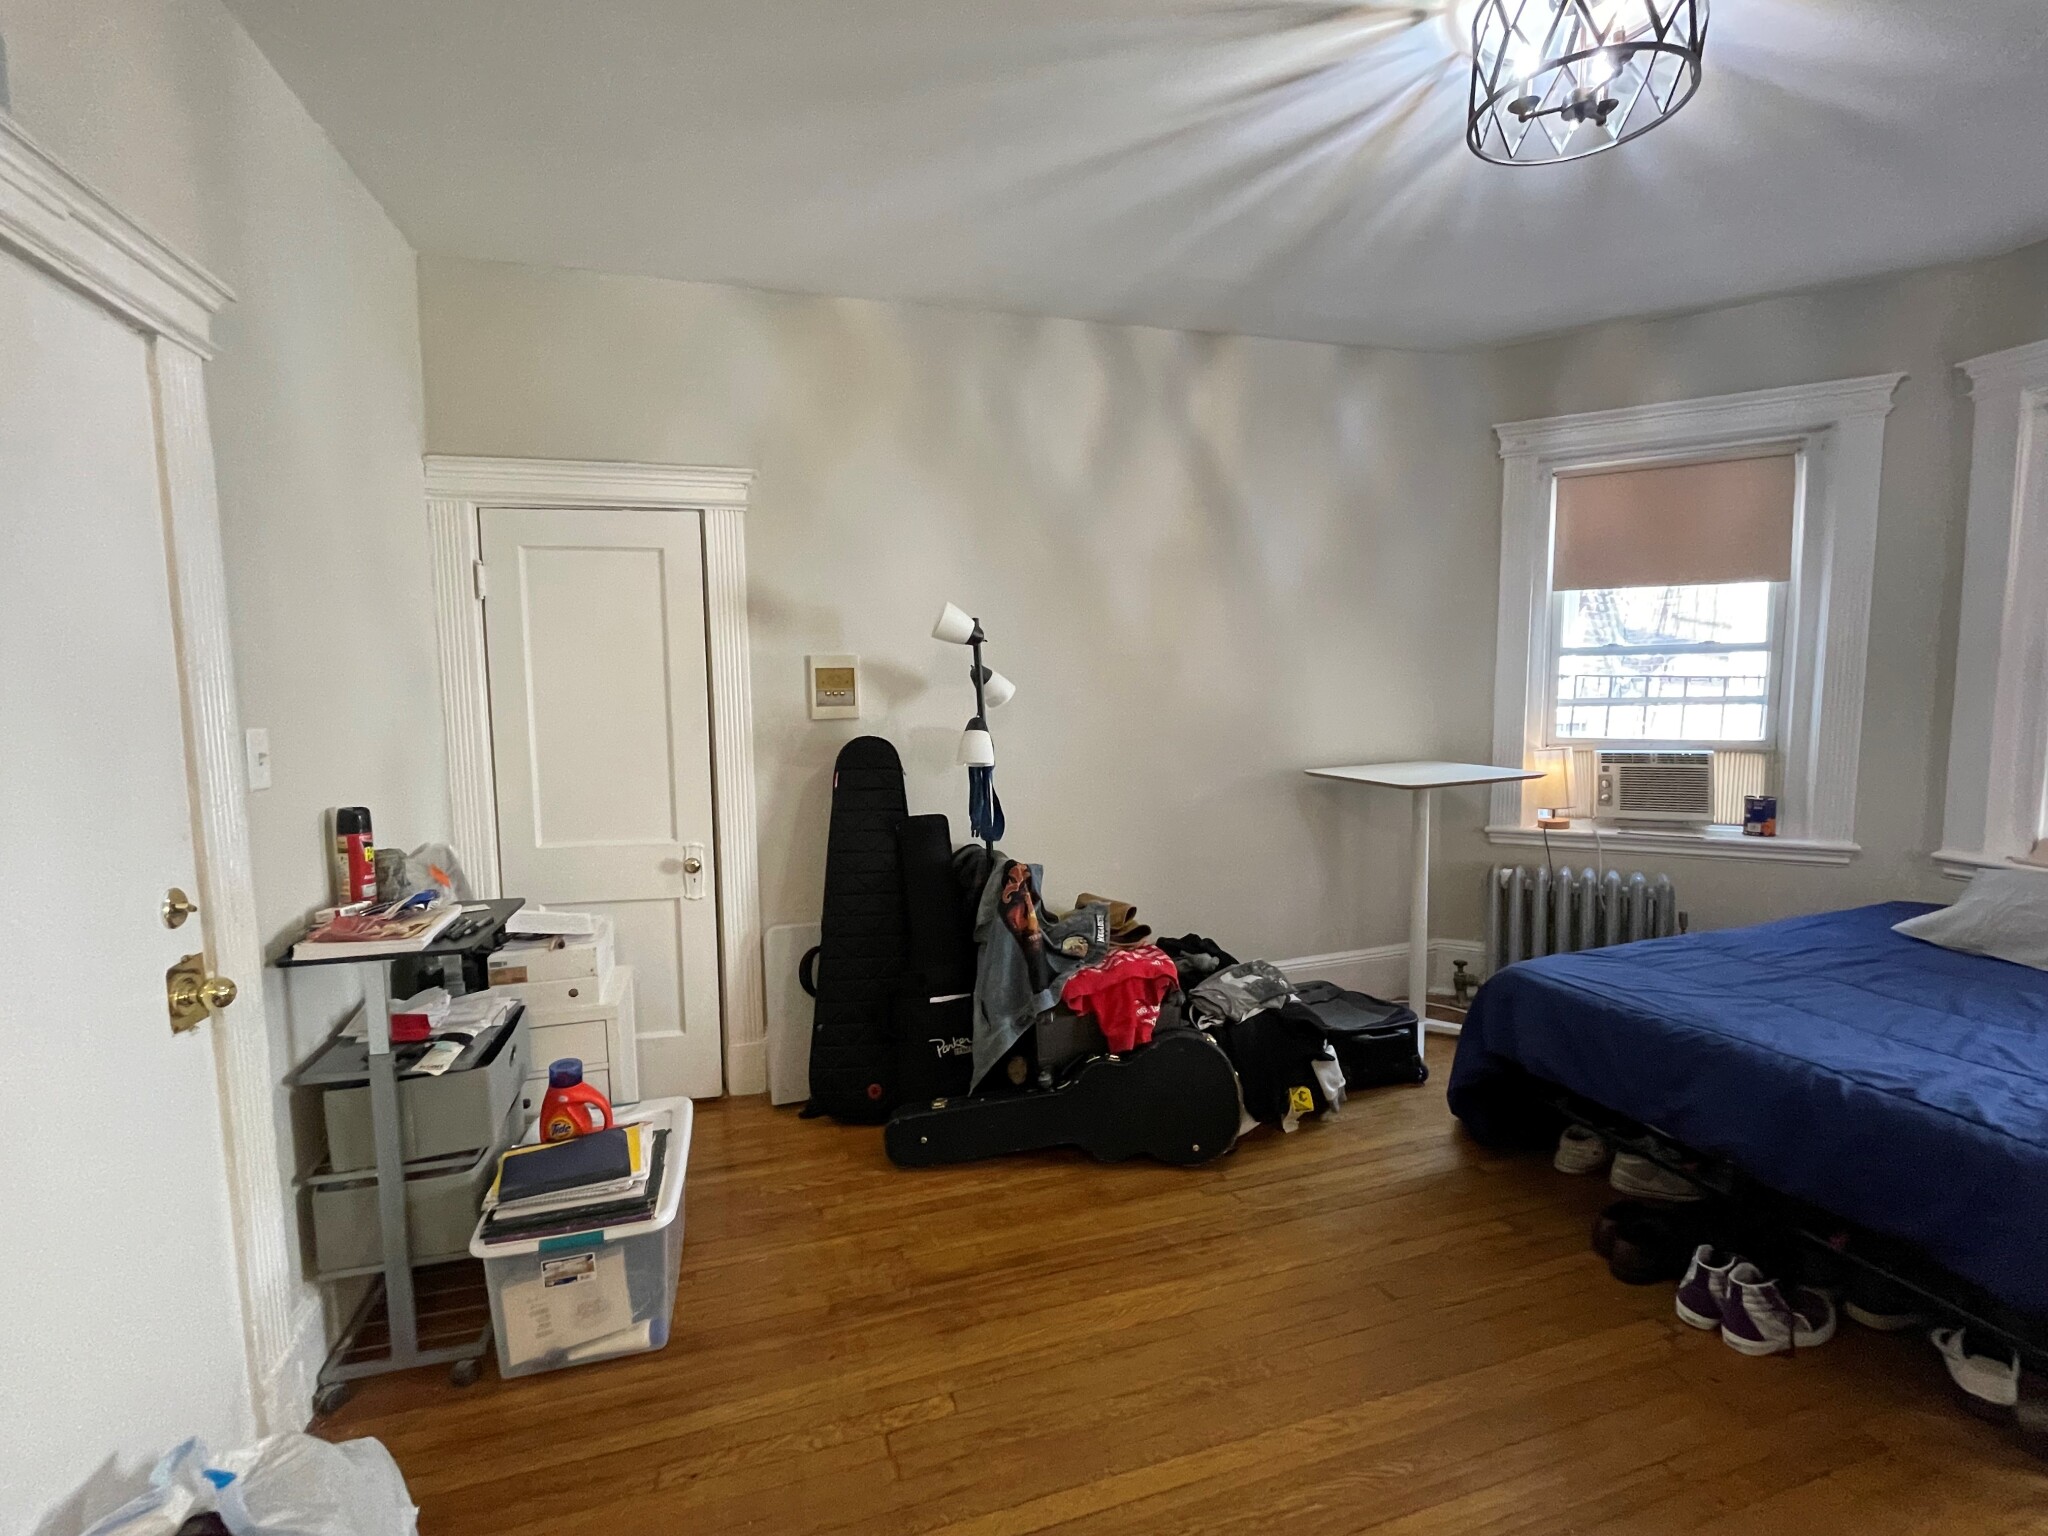 Photos of apartment on Riverway St.,Boston MA 02115